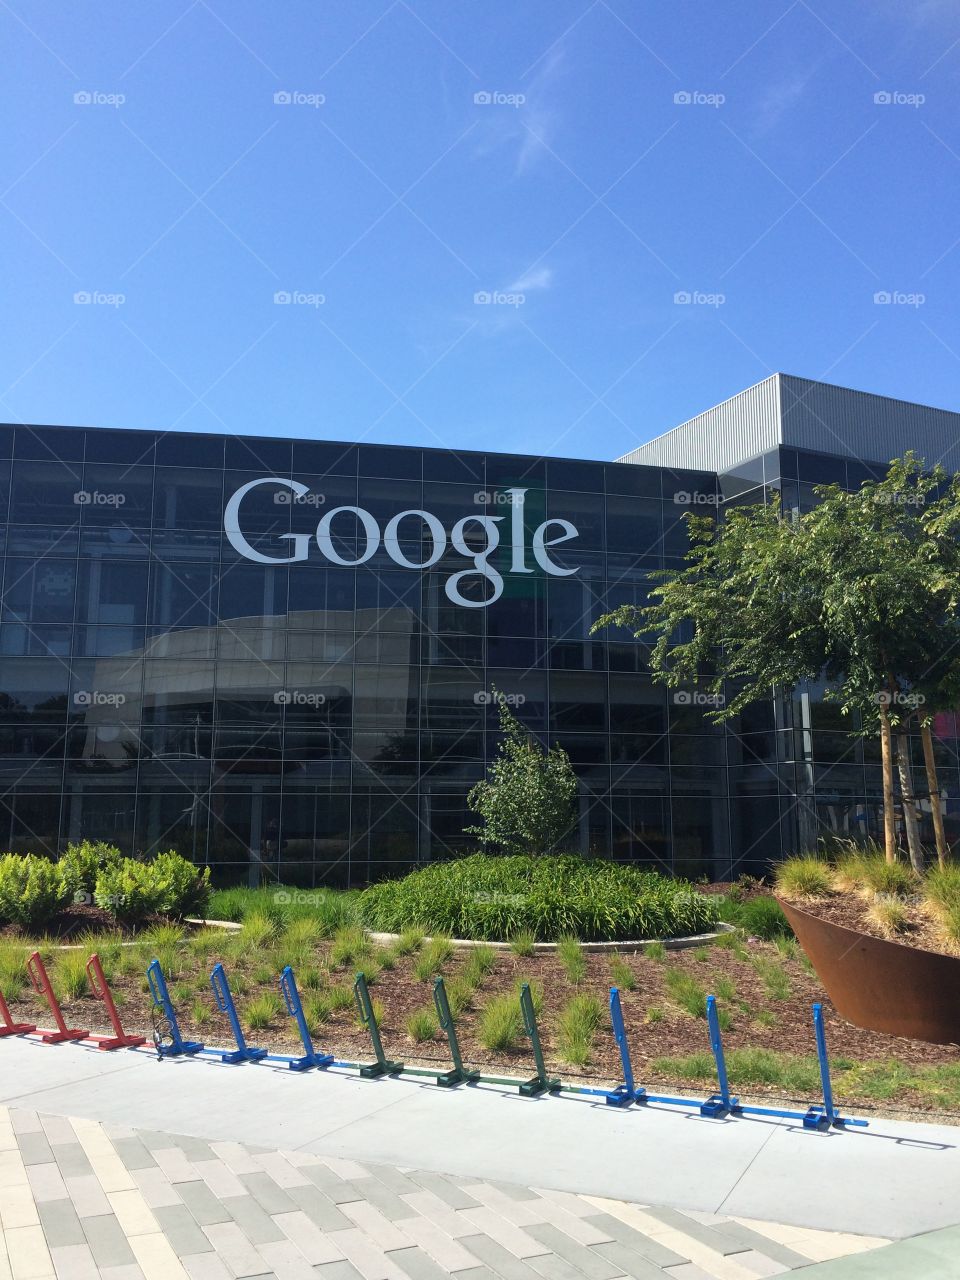 Google Headquarters. The headquarters sign